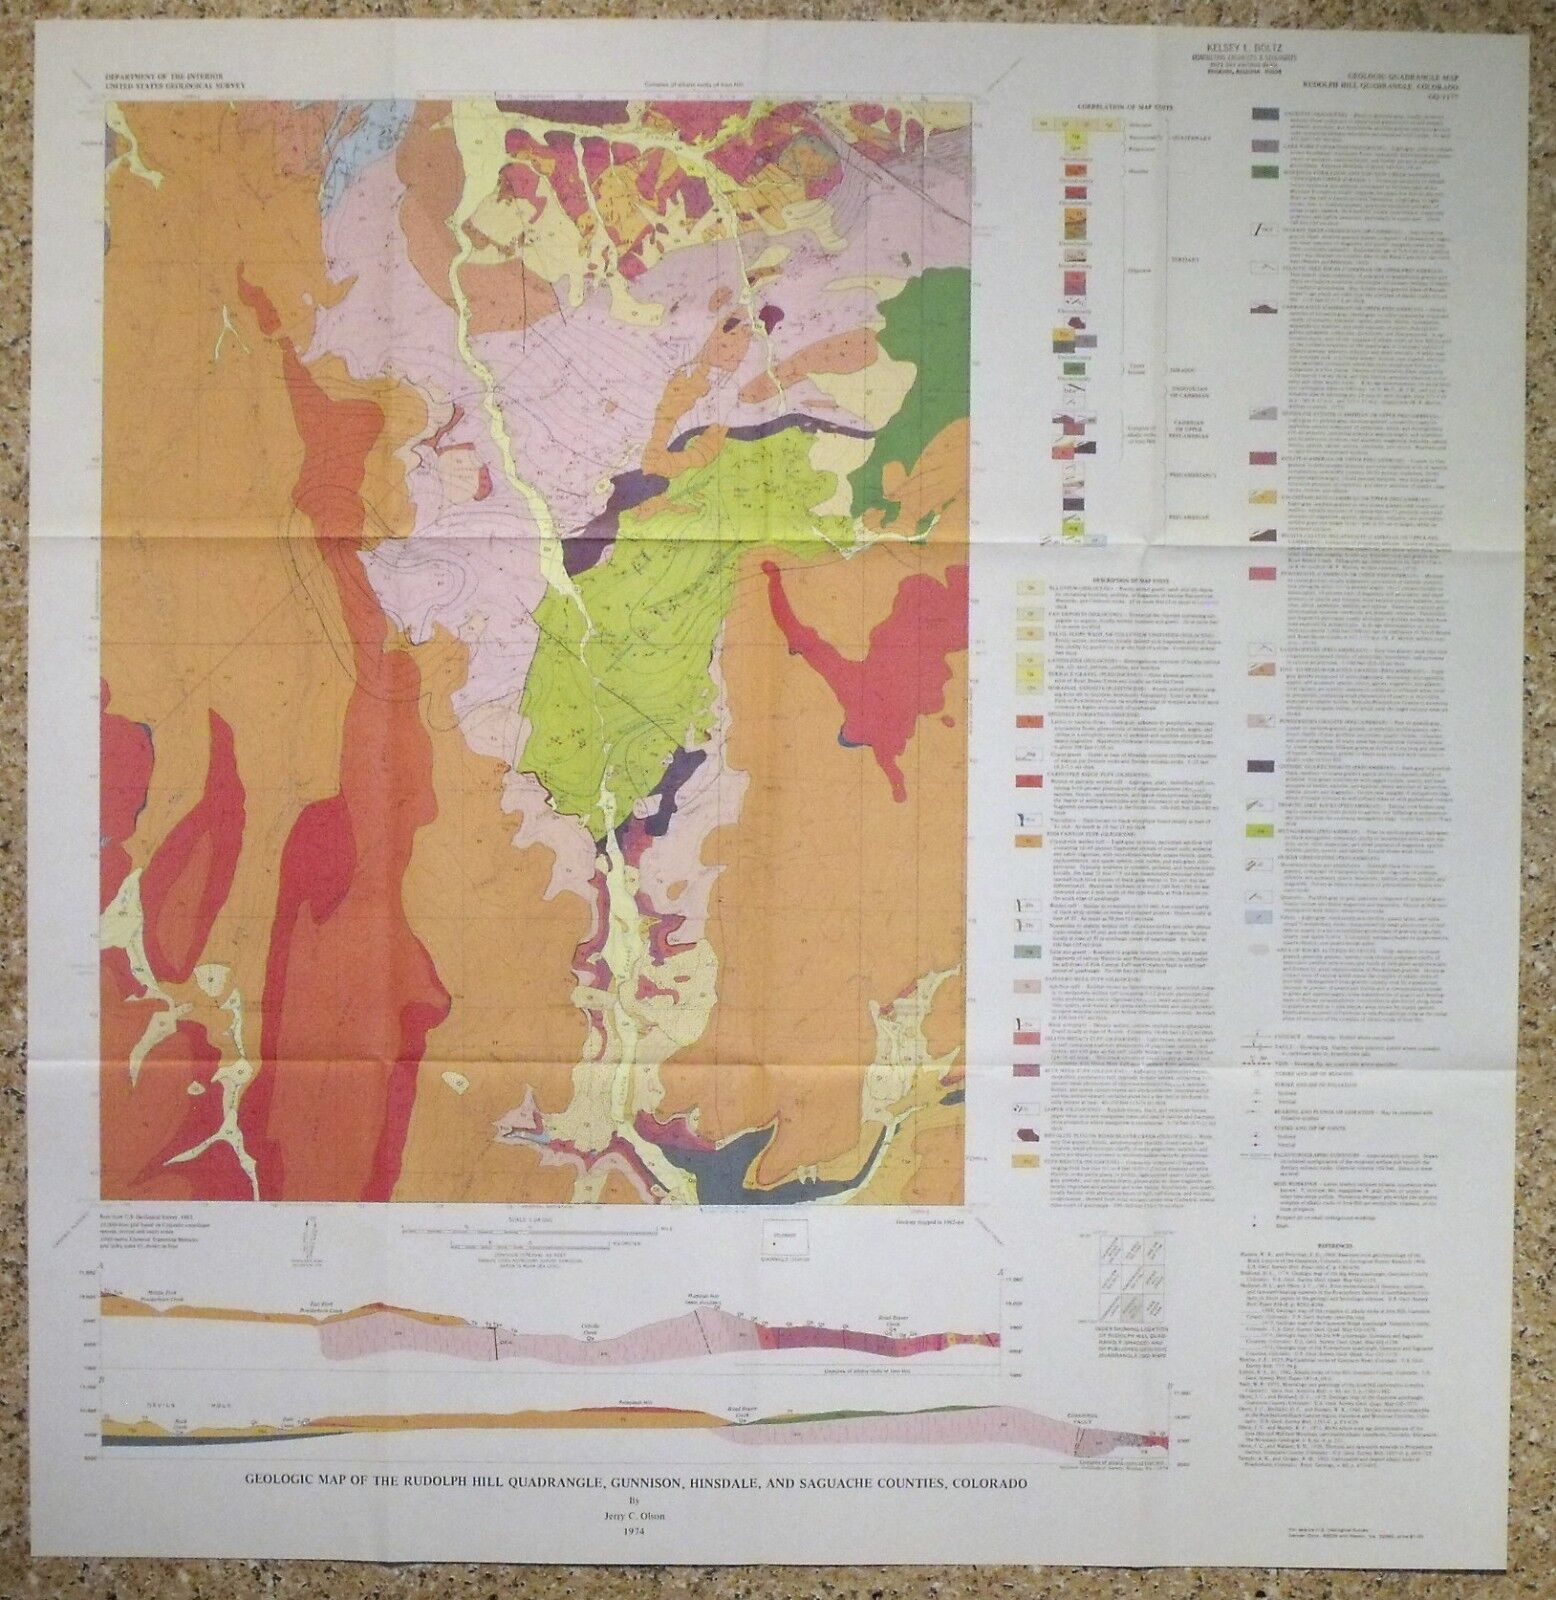 USGS RUDOLPH HILL, COLORADO GEOLOGIC MAP, Full Color Map Original Sleeve 1974